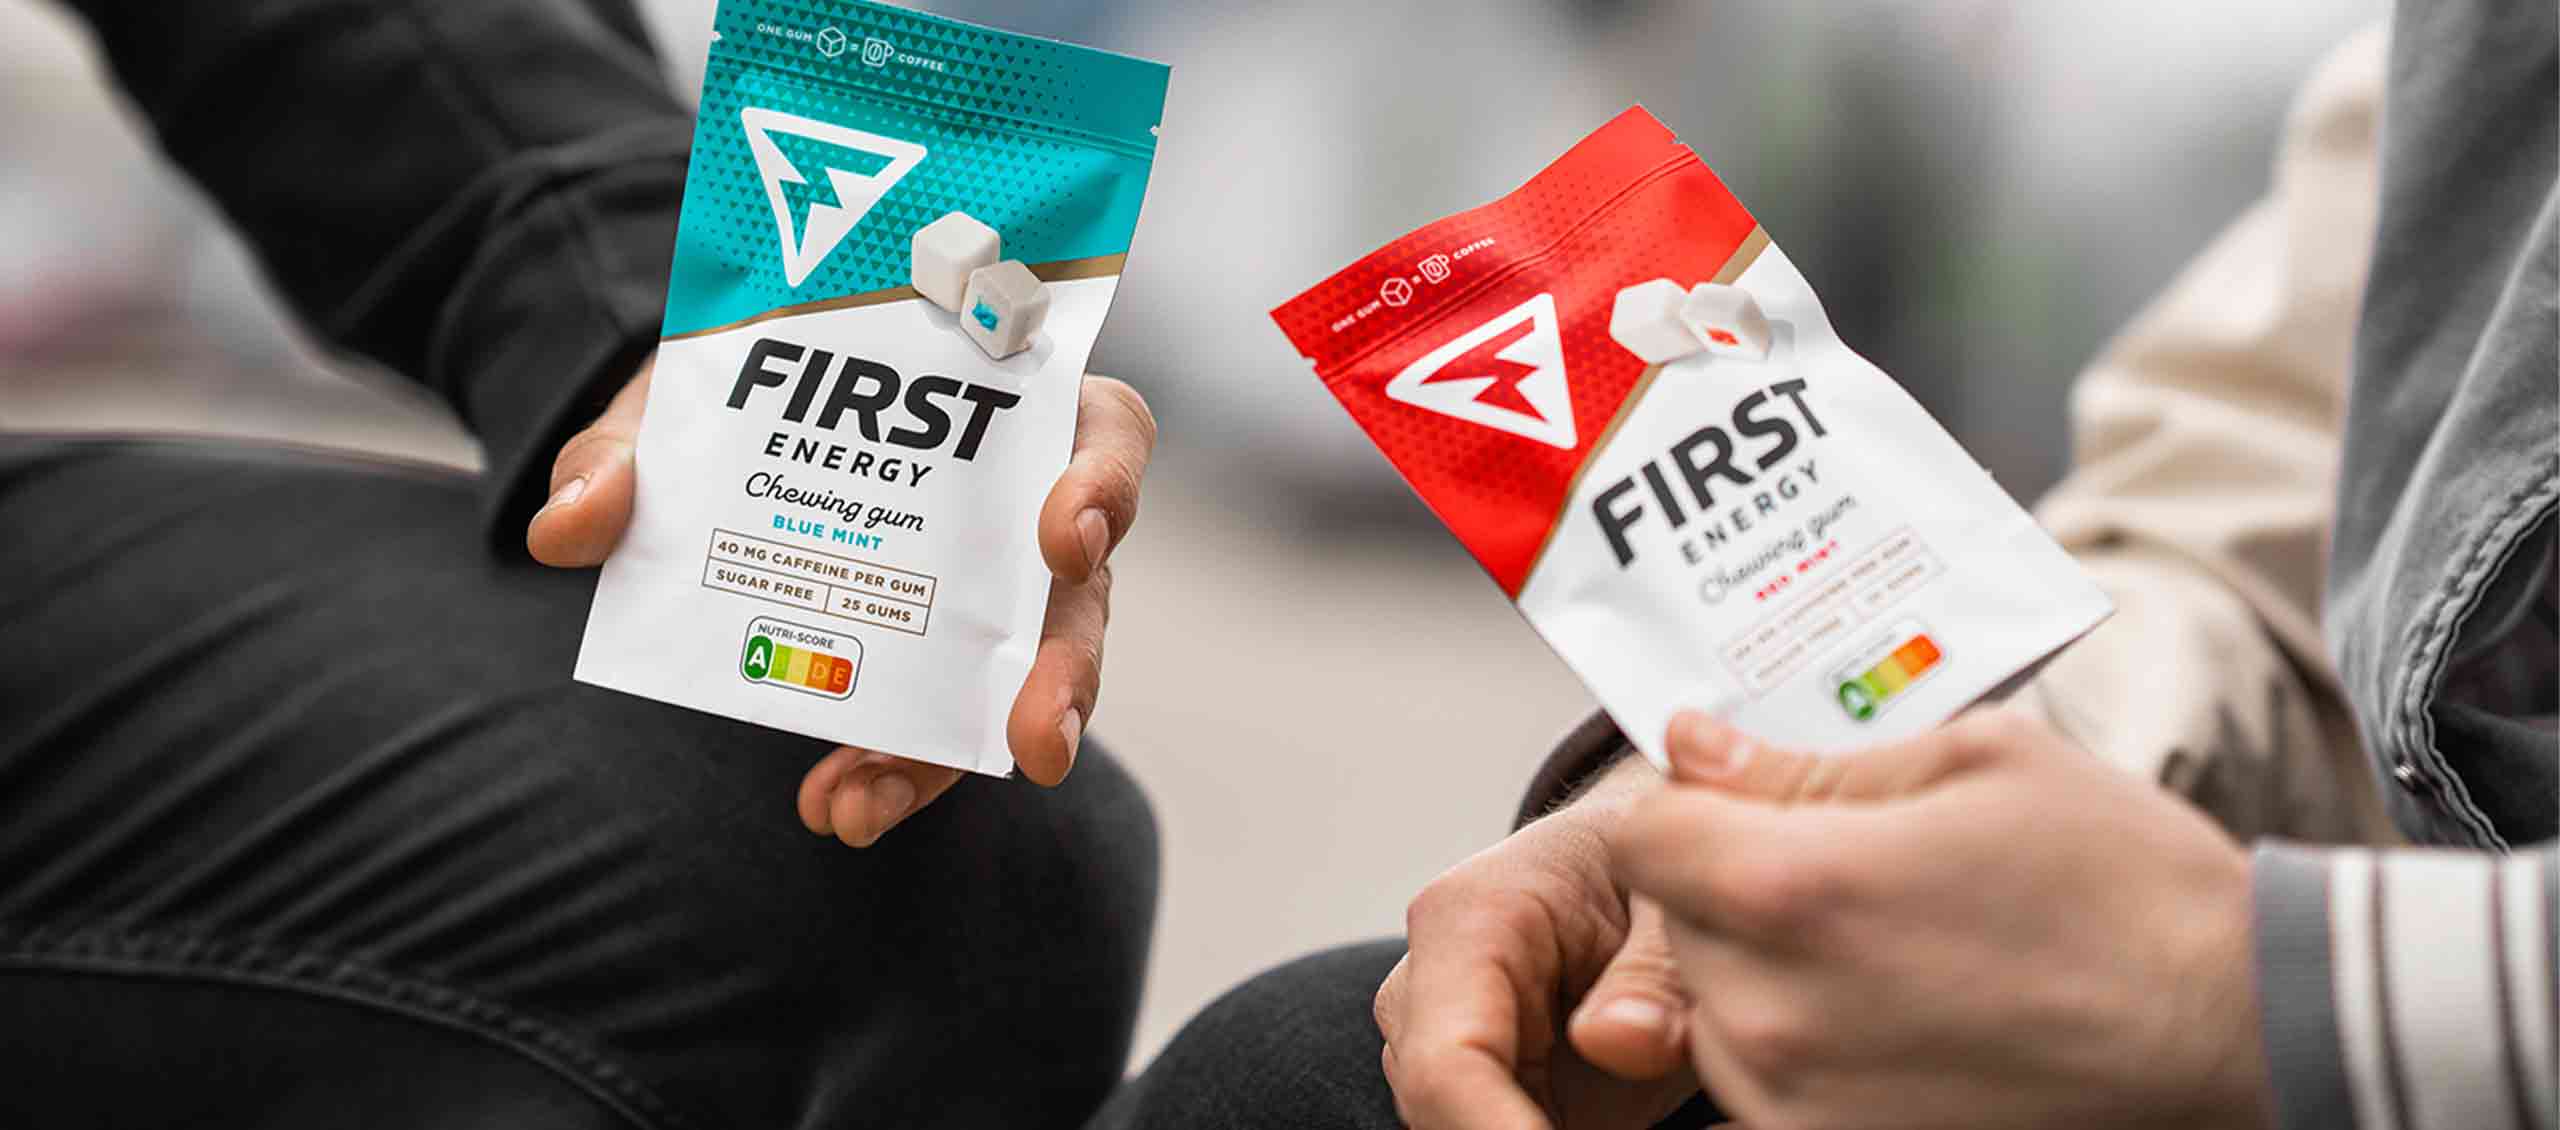 Energy Gum Original  Caffeine Chewing Gum by Run Gum for Athletes